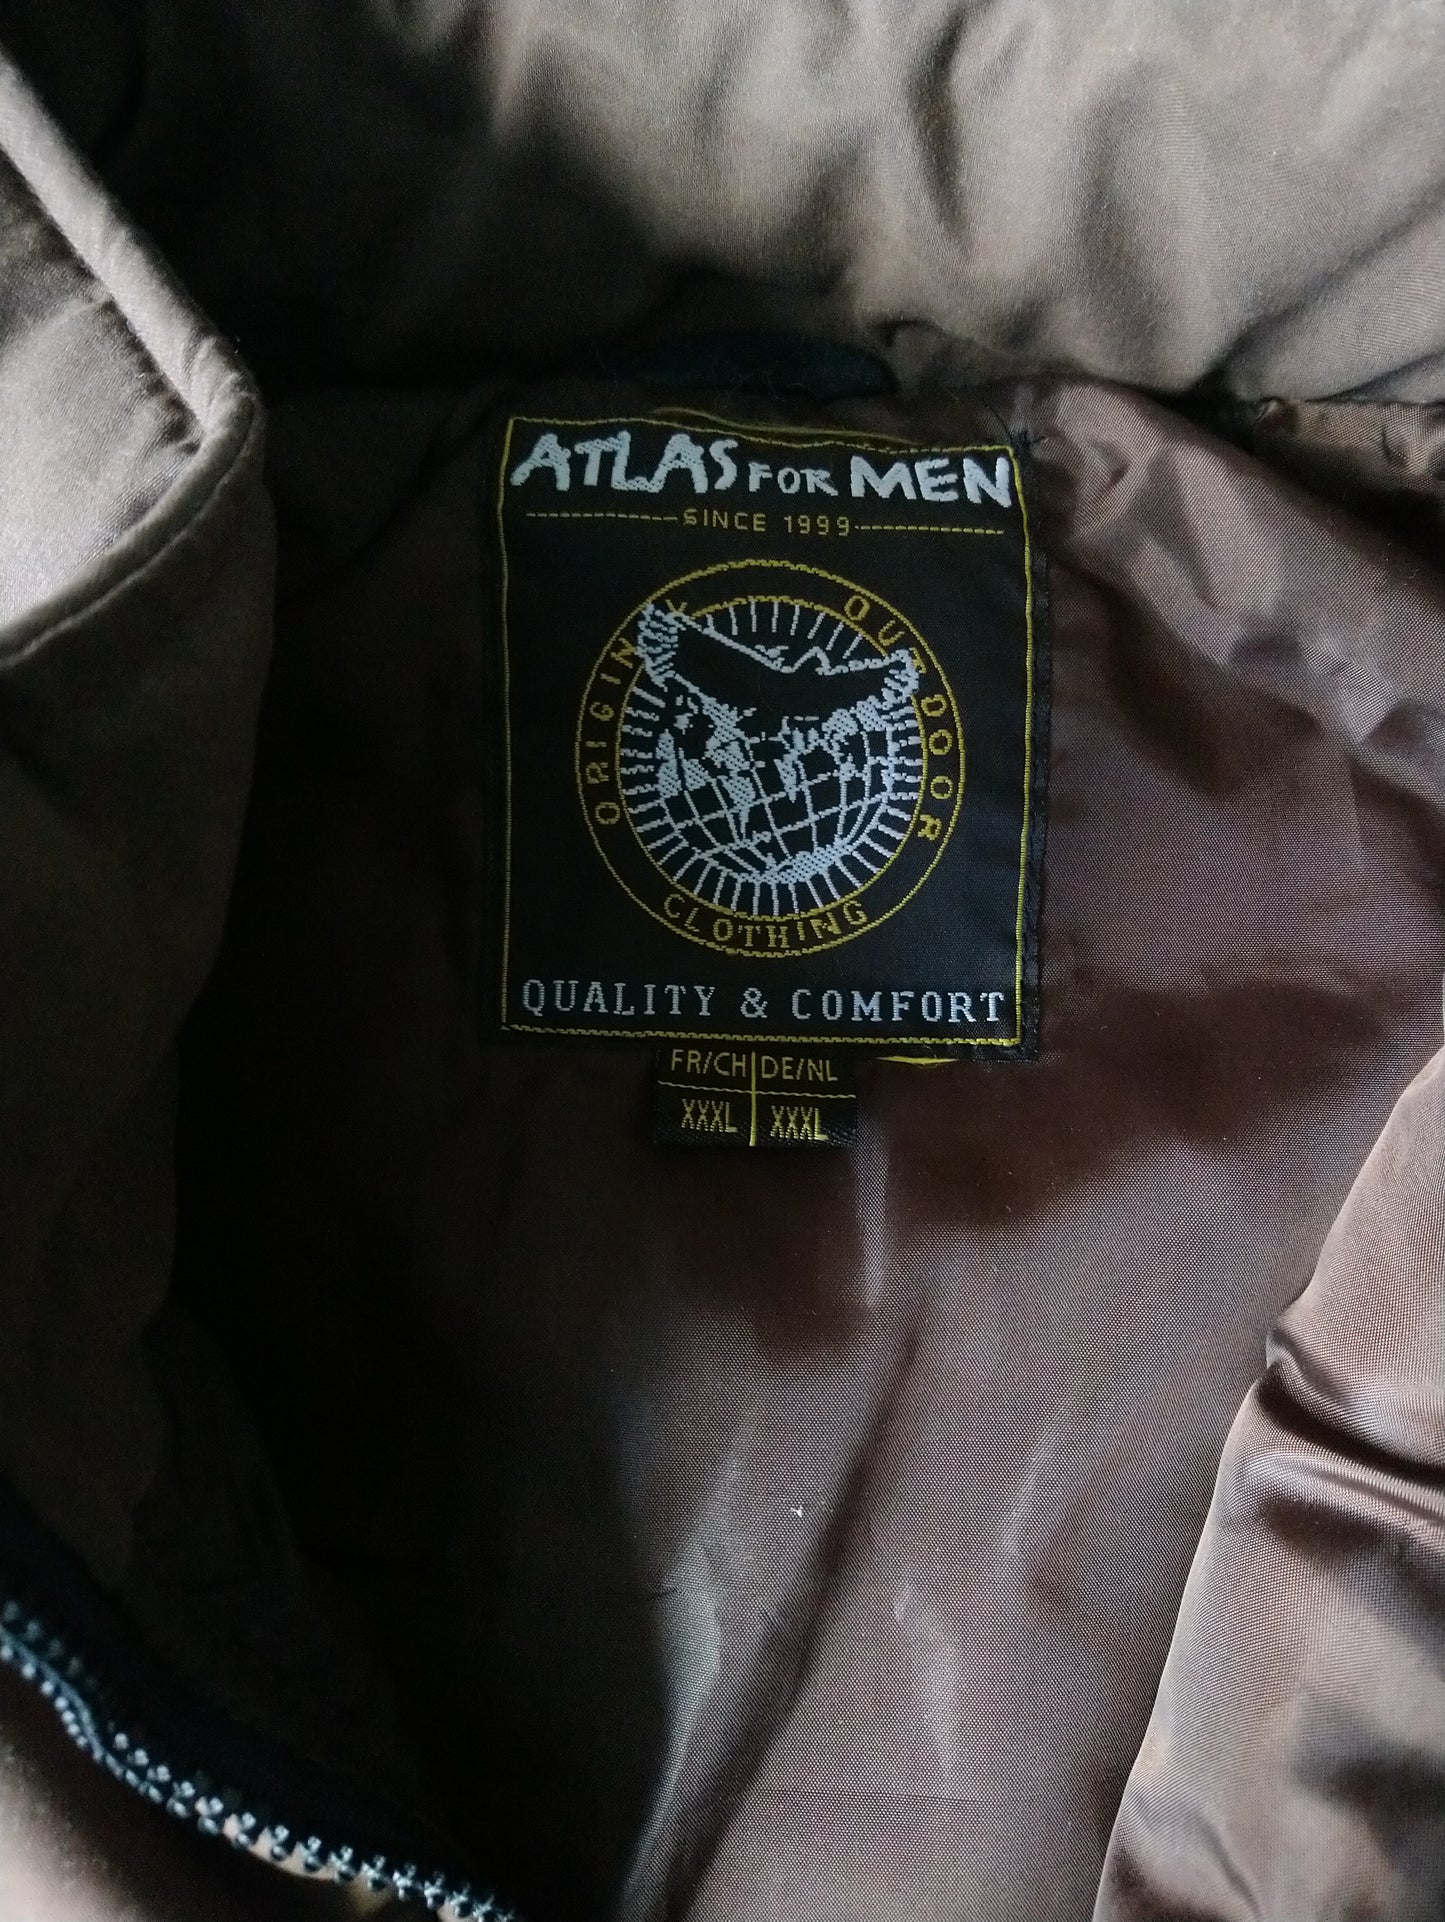 Atlas for men Bodywarmer. |Bruin Zwart gekleurd. Maat 3XL / XXXL.